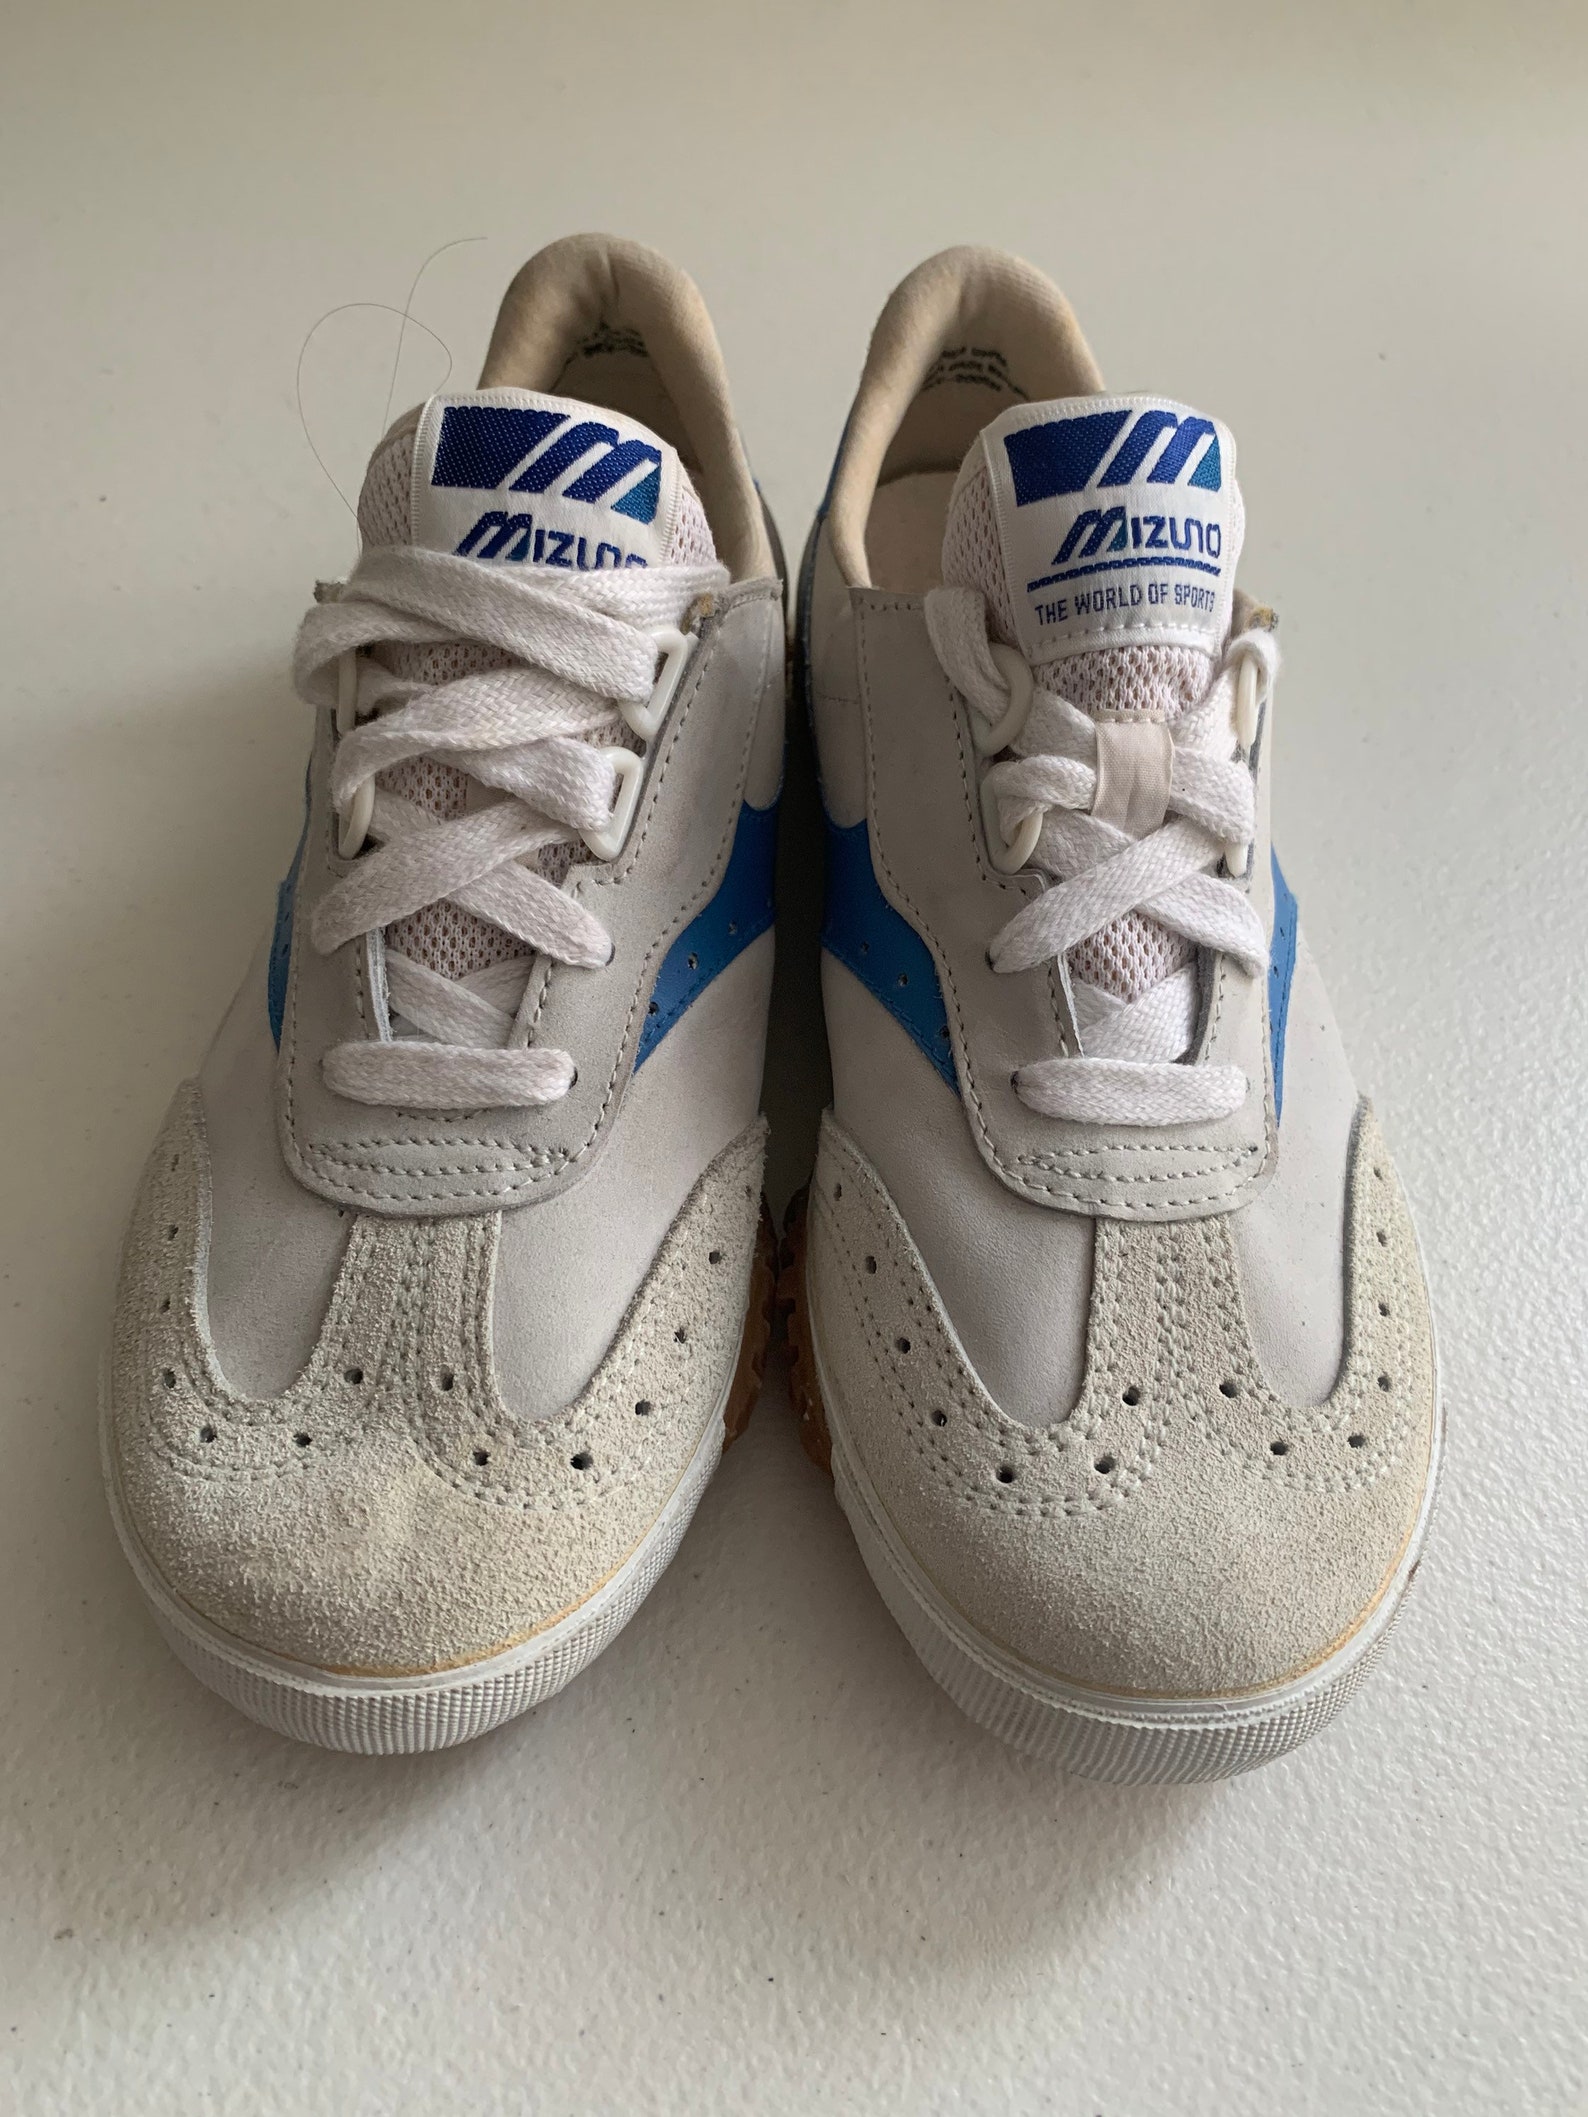 Mizuno M-Line Low Top Vintage Shoes 1980s White Blue Women | Etsy